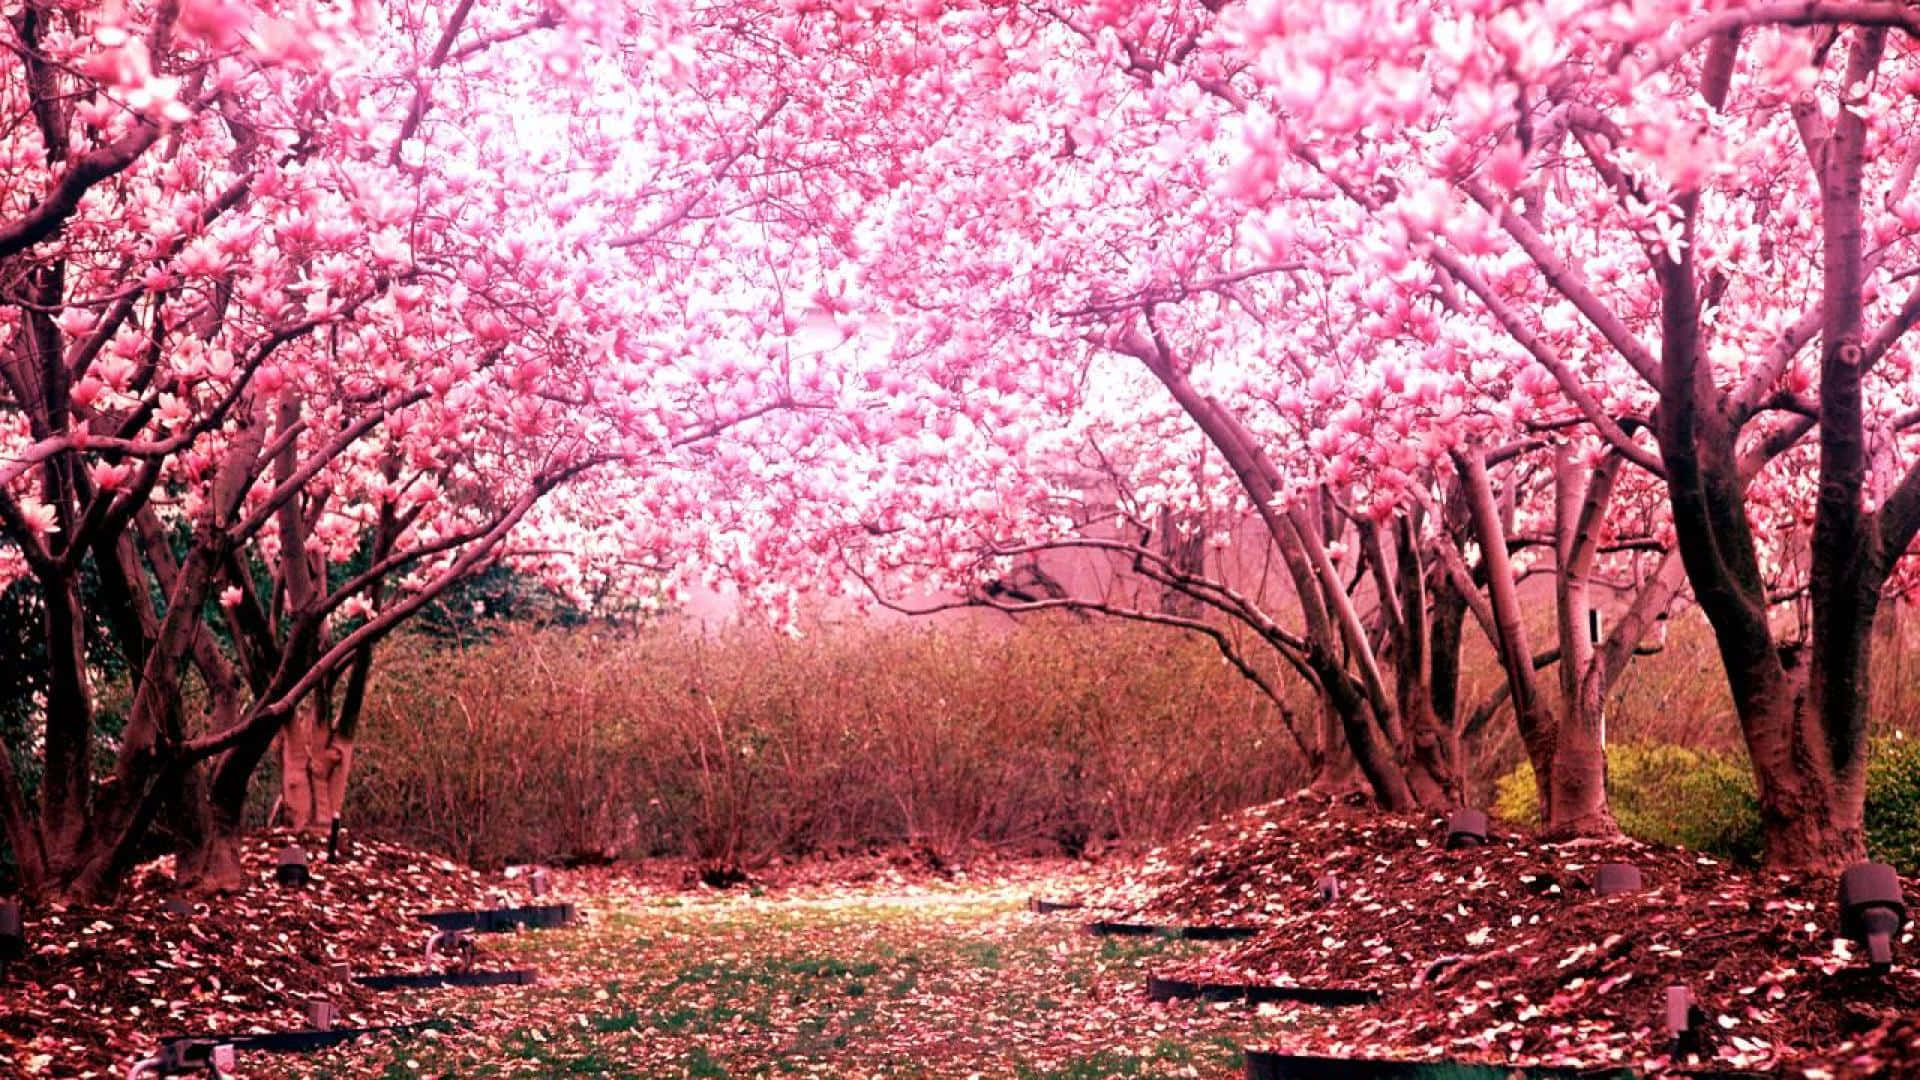 Vibrant Cherry Blossom Canopy.jpg Wallpaper